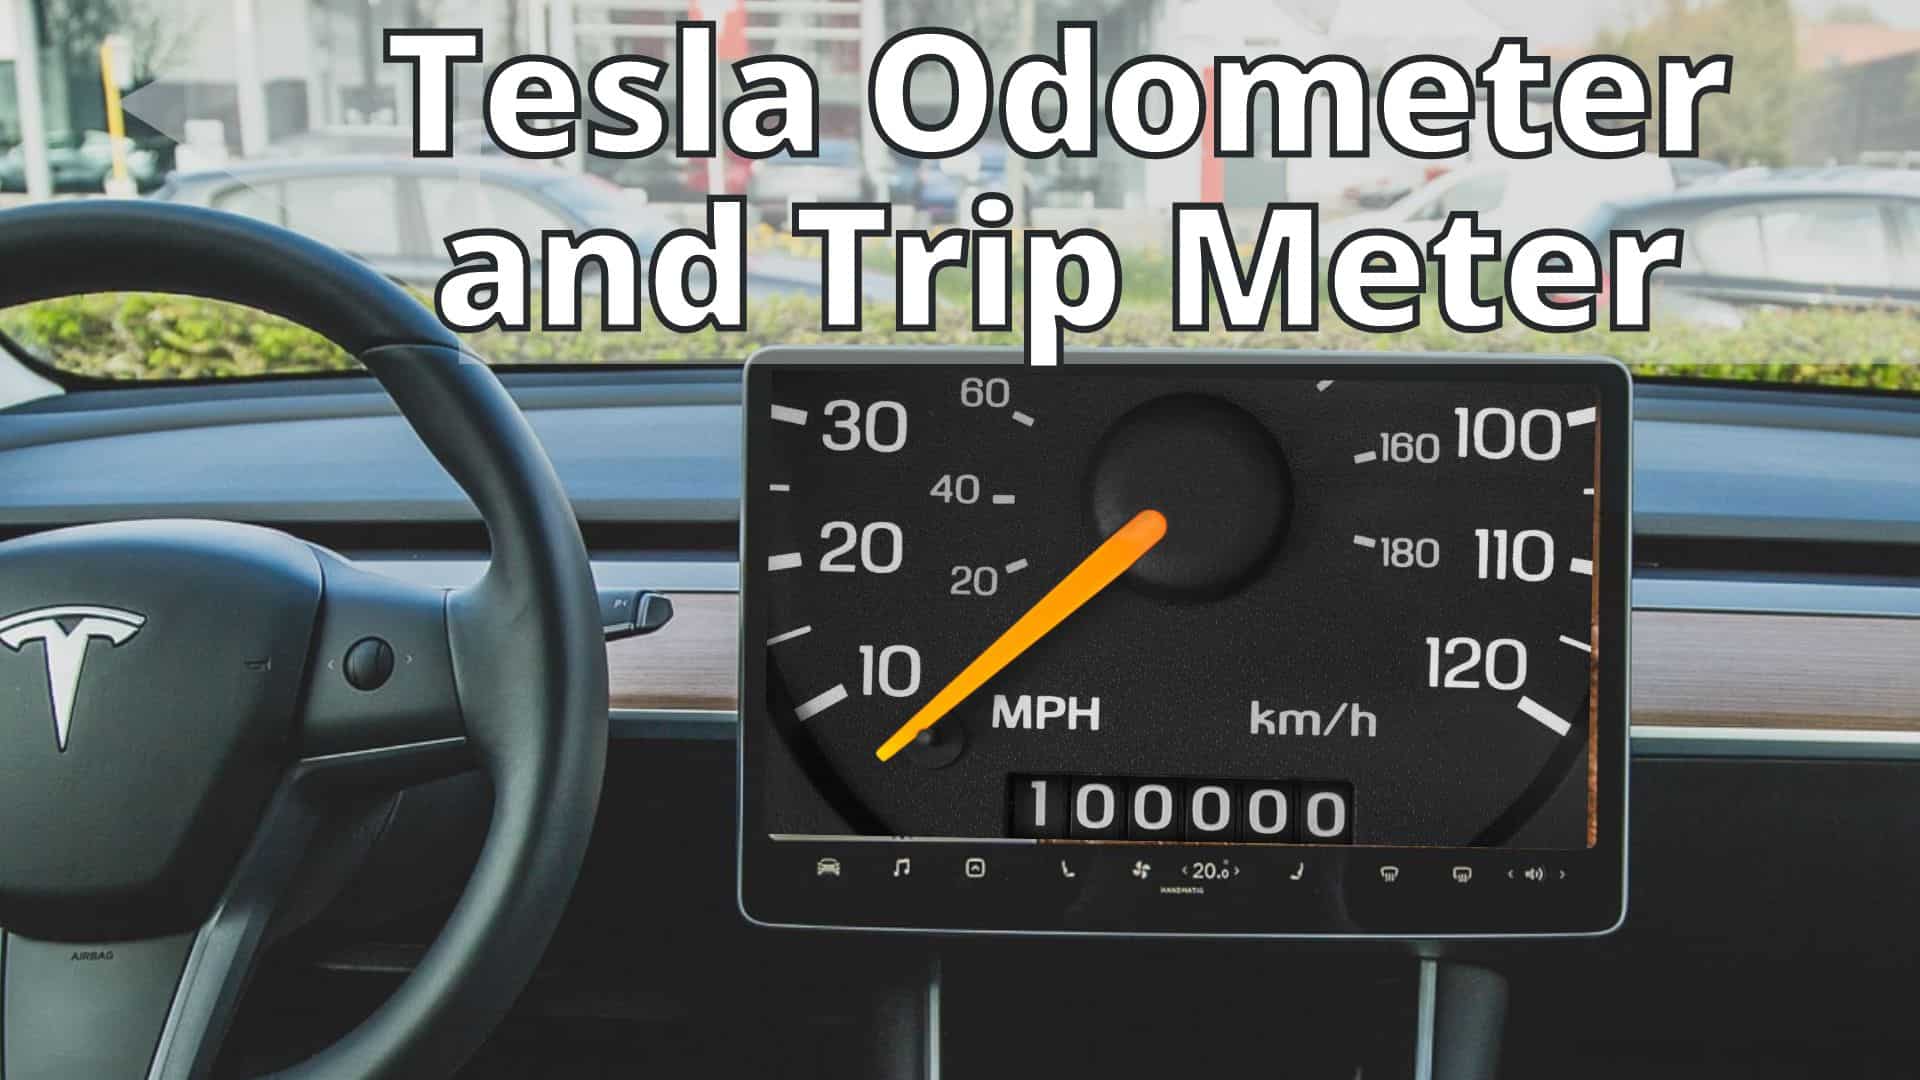 Tesla Odometer and Trip Meter